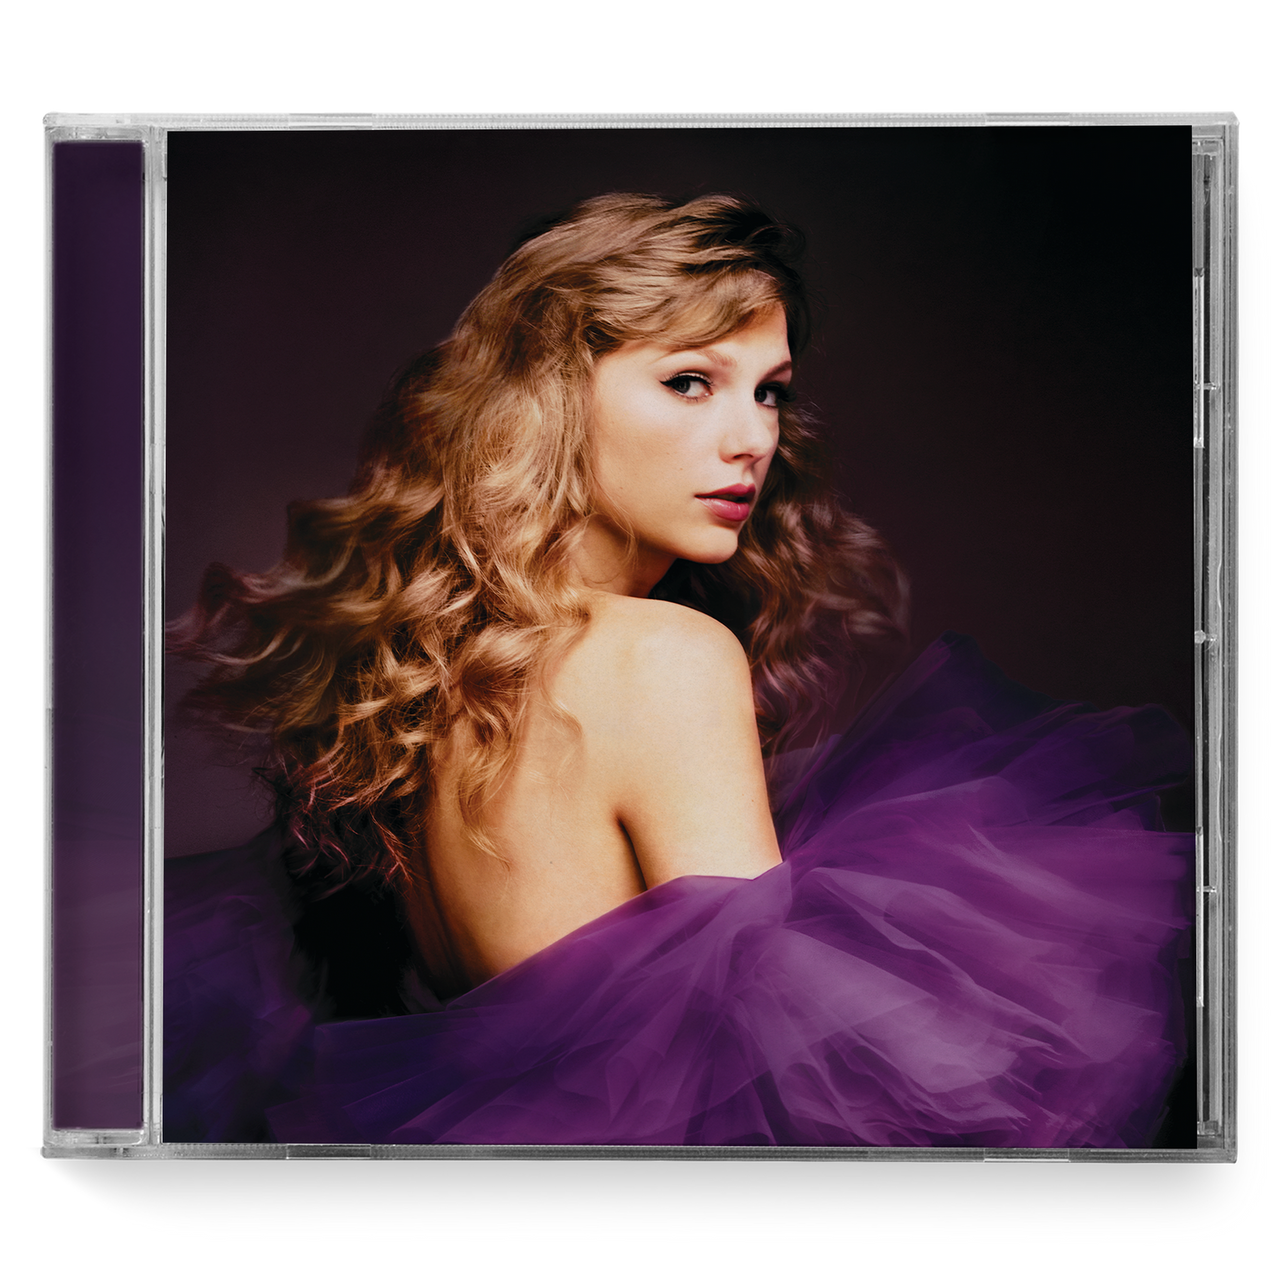 CDJapan : Speak Now (Taylor's Version) [Import Disc] Taylor Swift CD Album